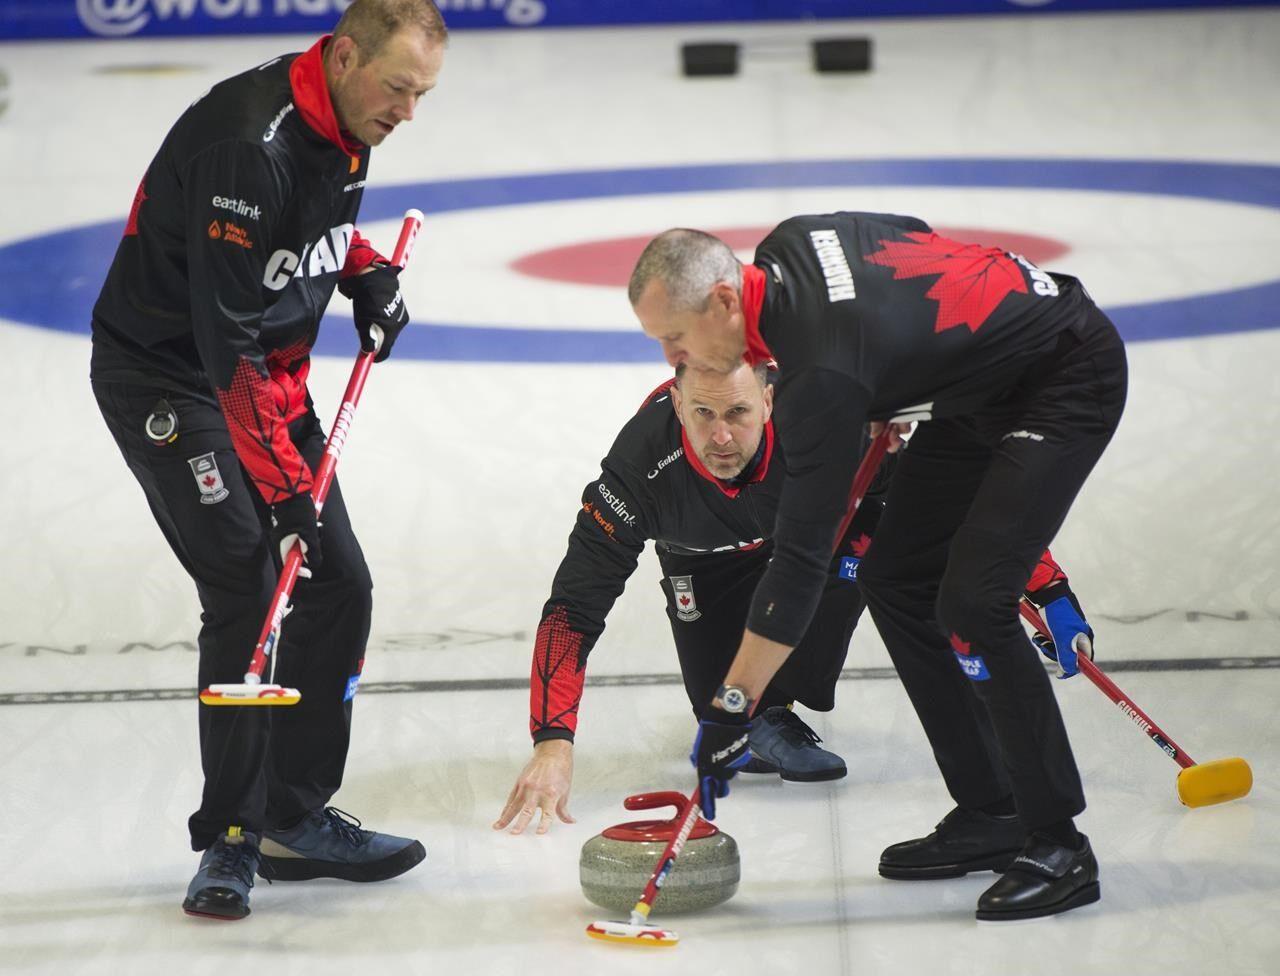 Sluchinski brings new Alberta team to deep Canadian men's curling